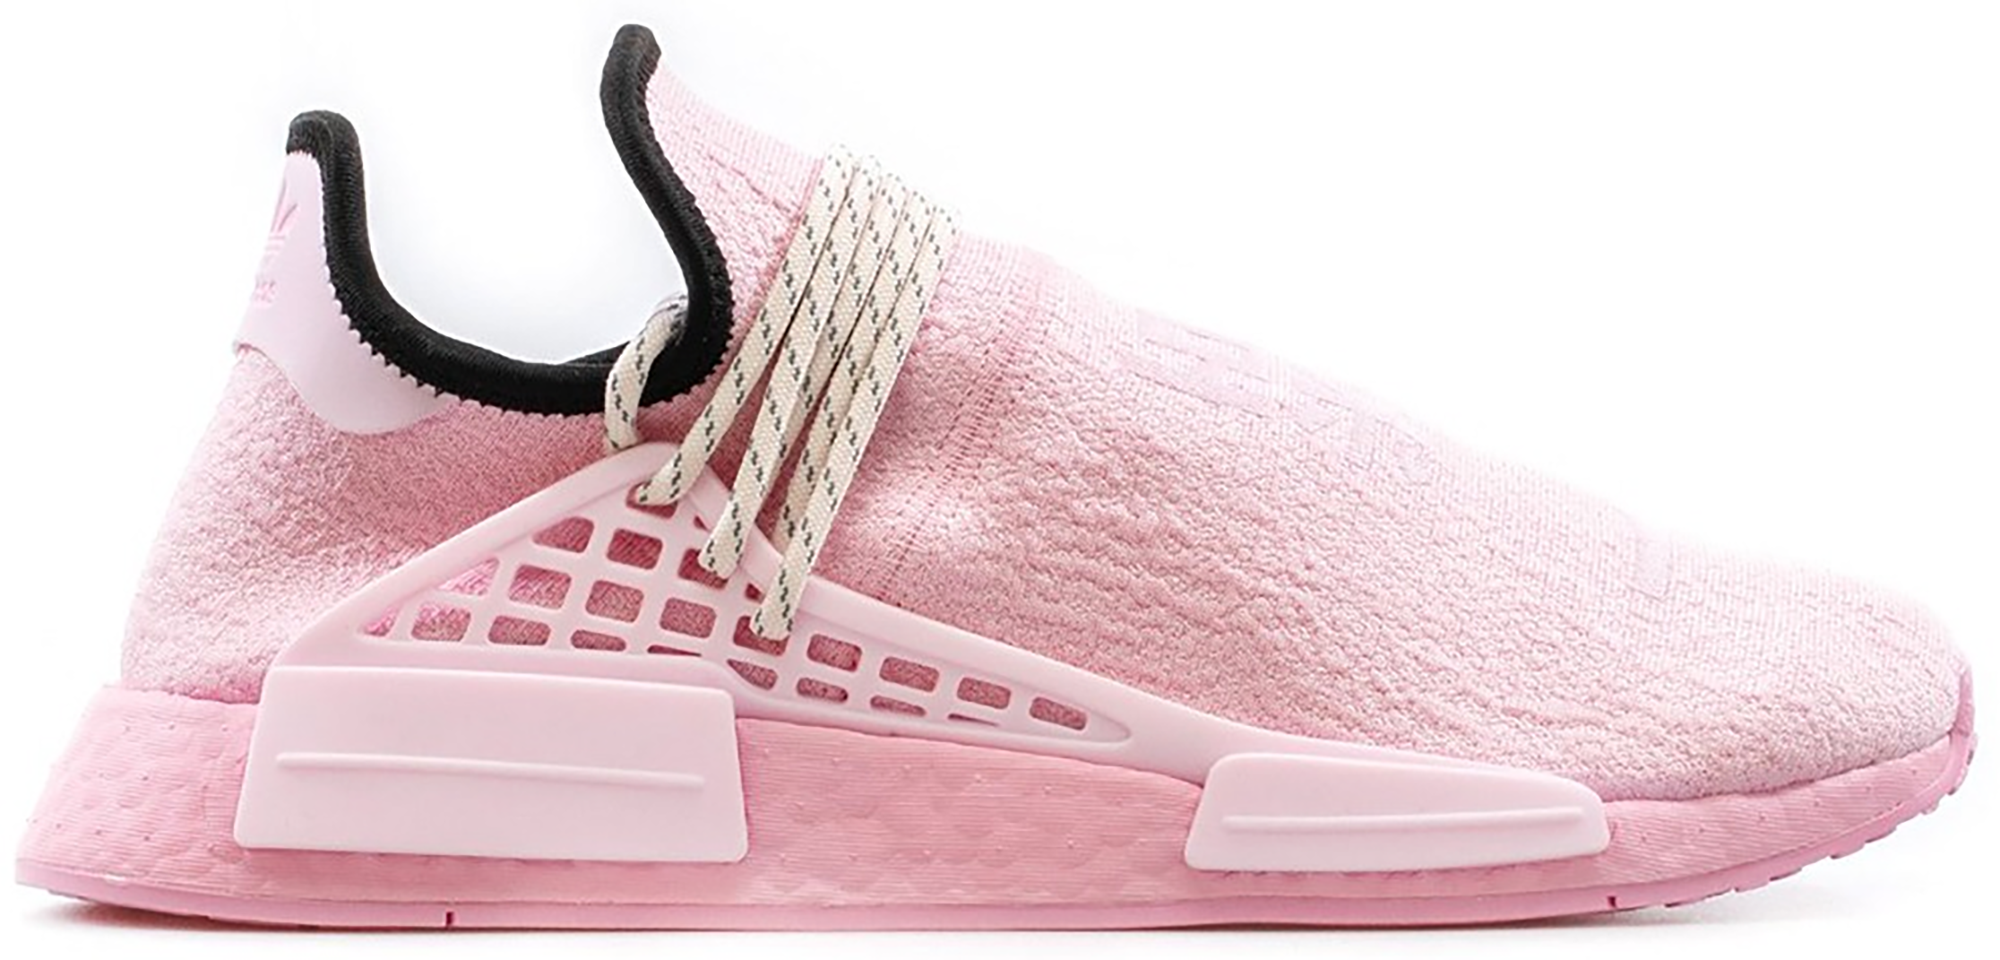 adidas boost nmd pink